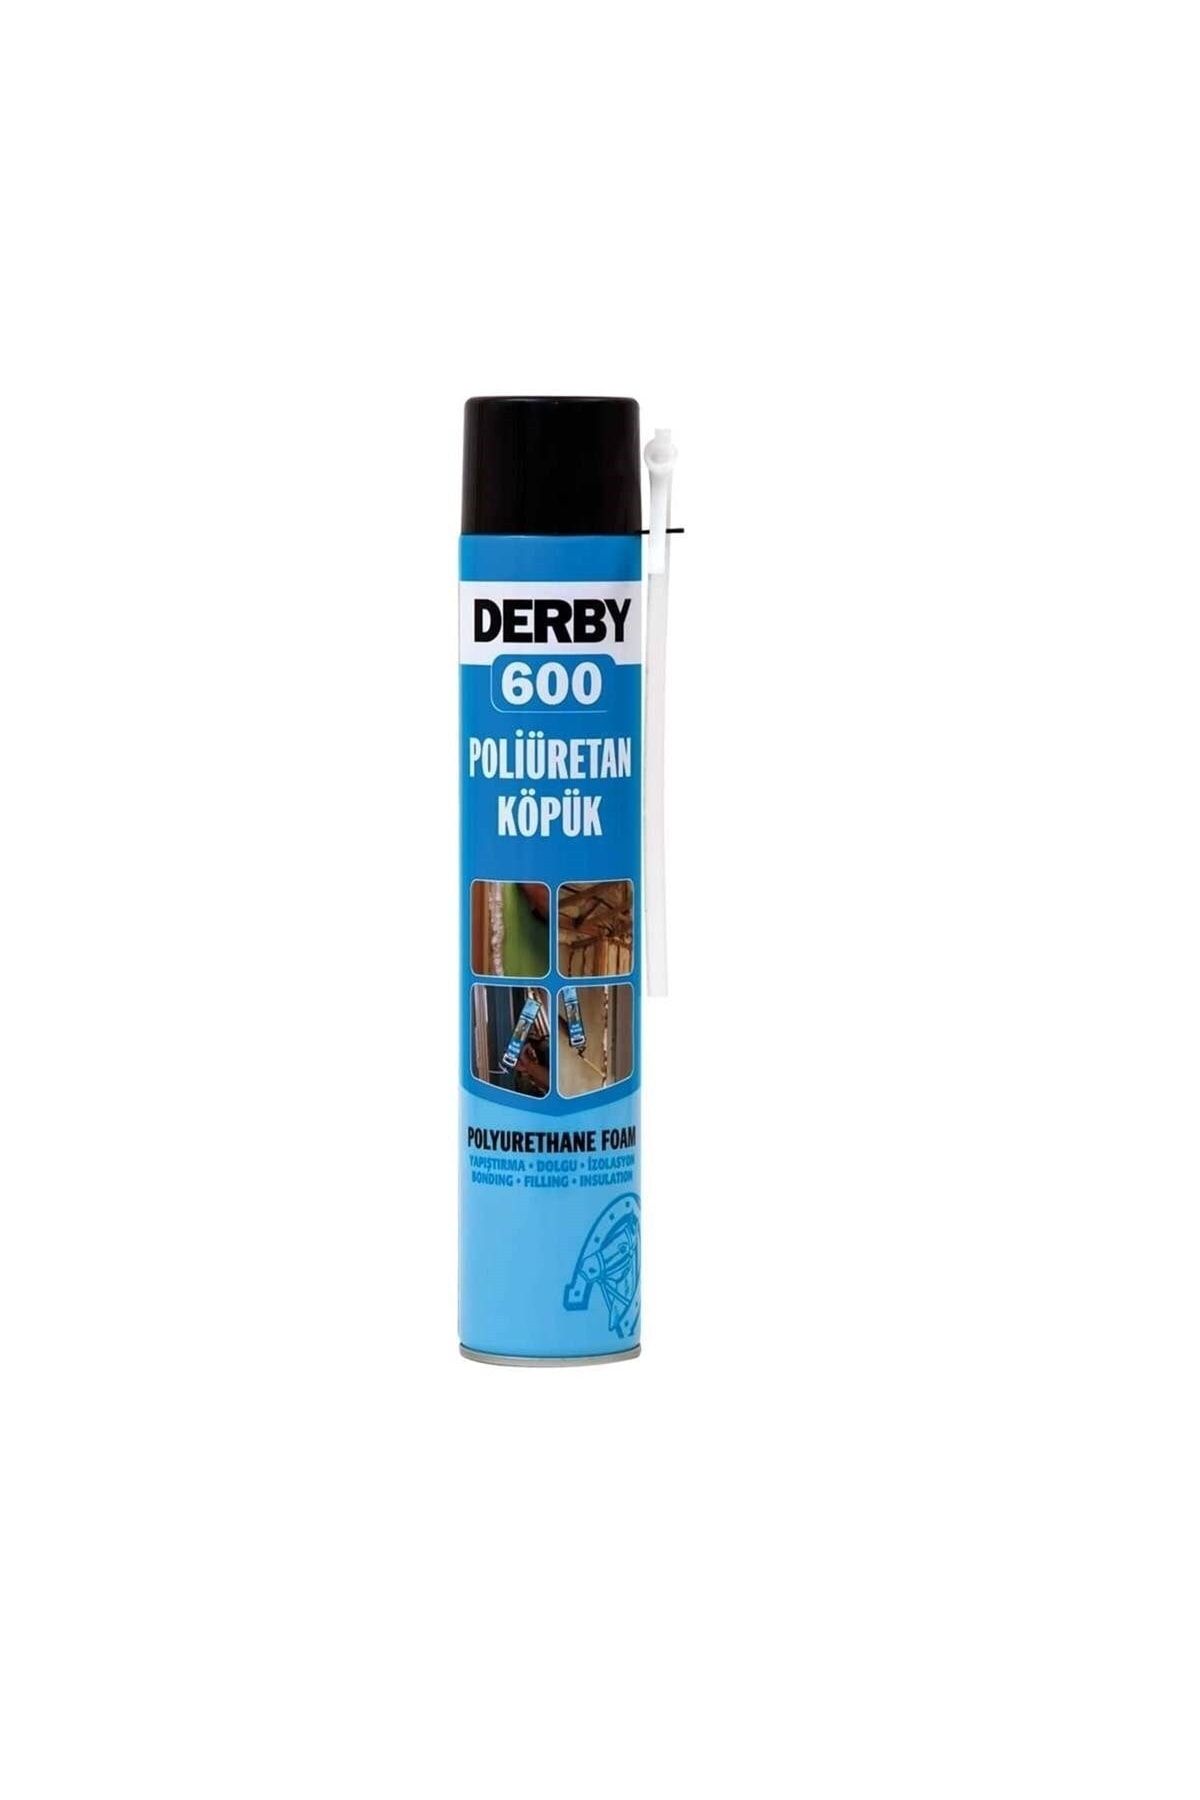 Derby Poliüretan Köpük 600